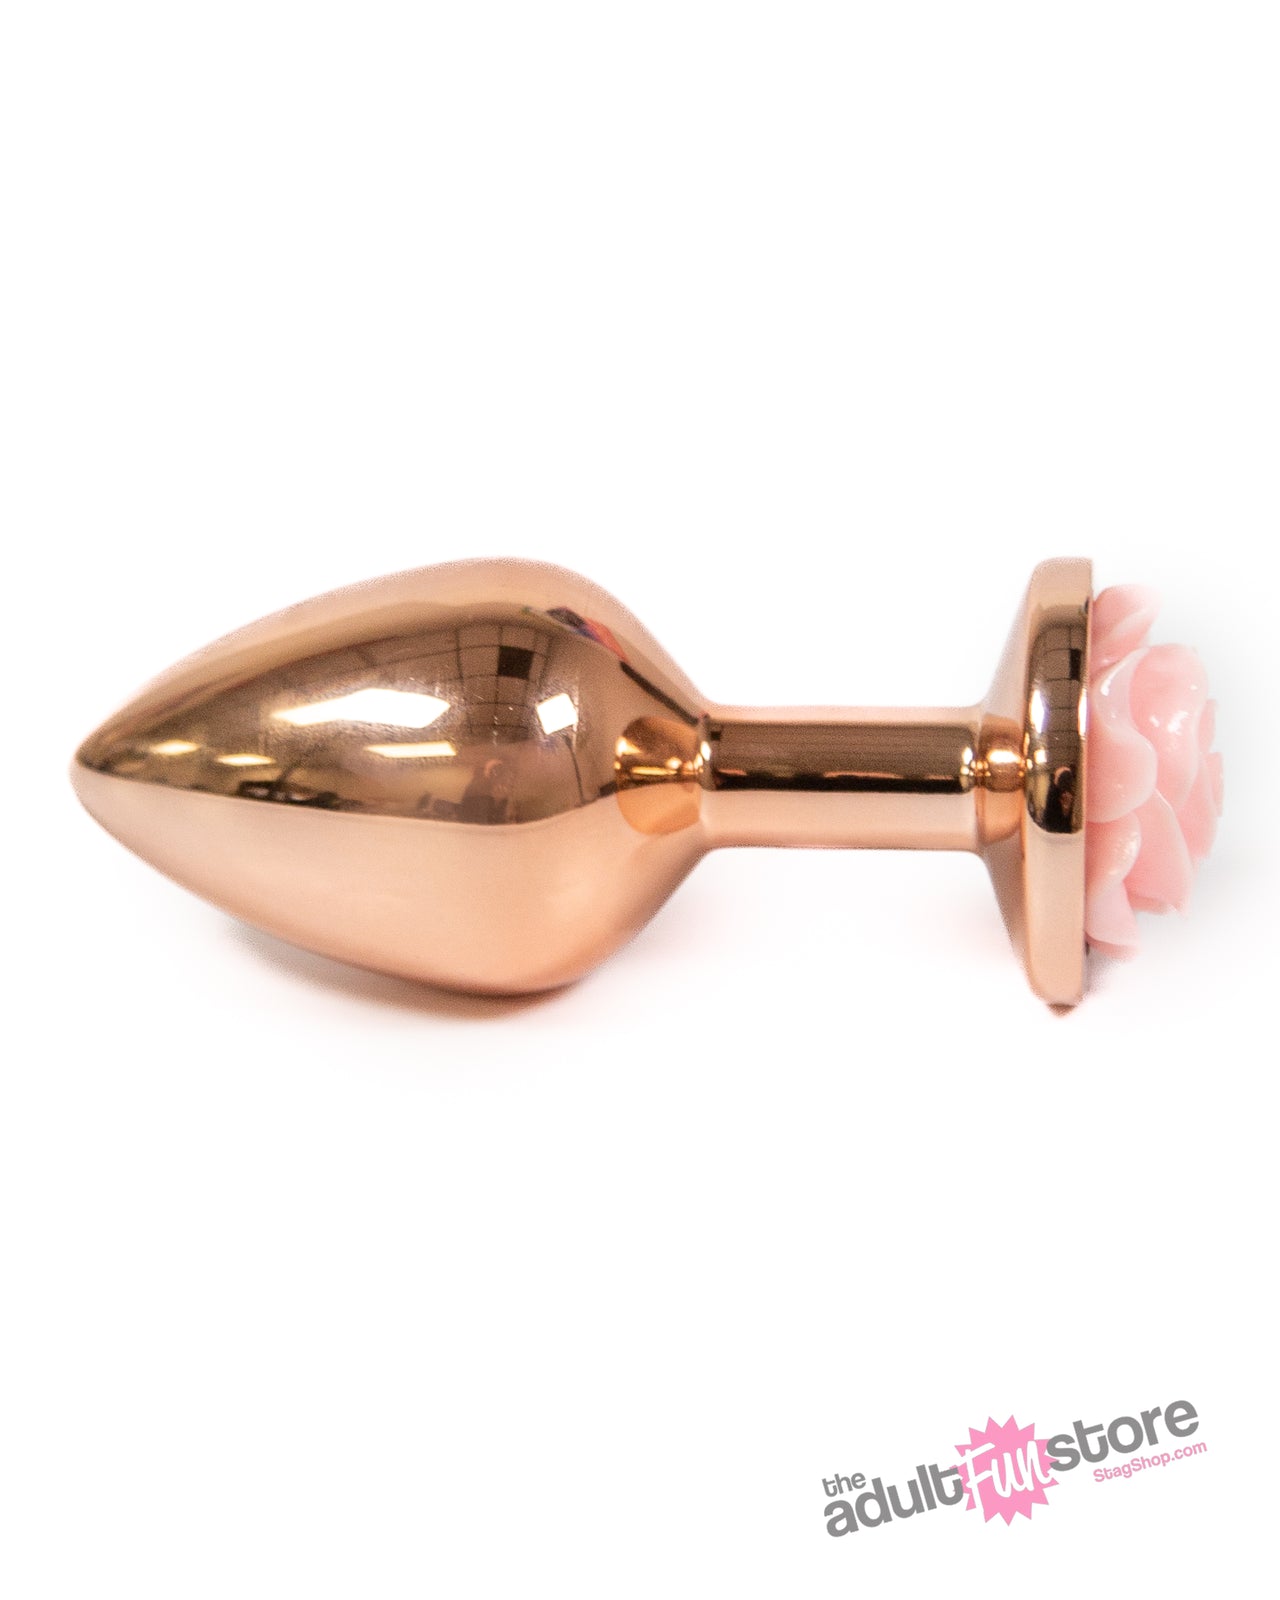 NS Novelties - Rear Assets - Aluminum Rose Butt Plug - Rose Gold/Pink - Medium - 3.5 Inch - Stag Shop